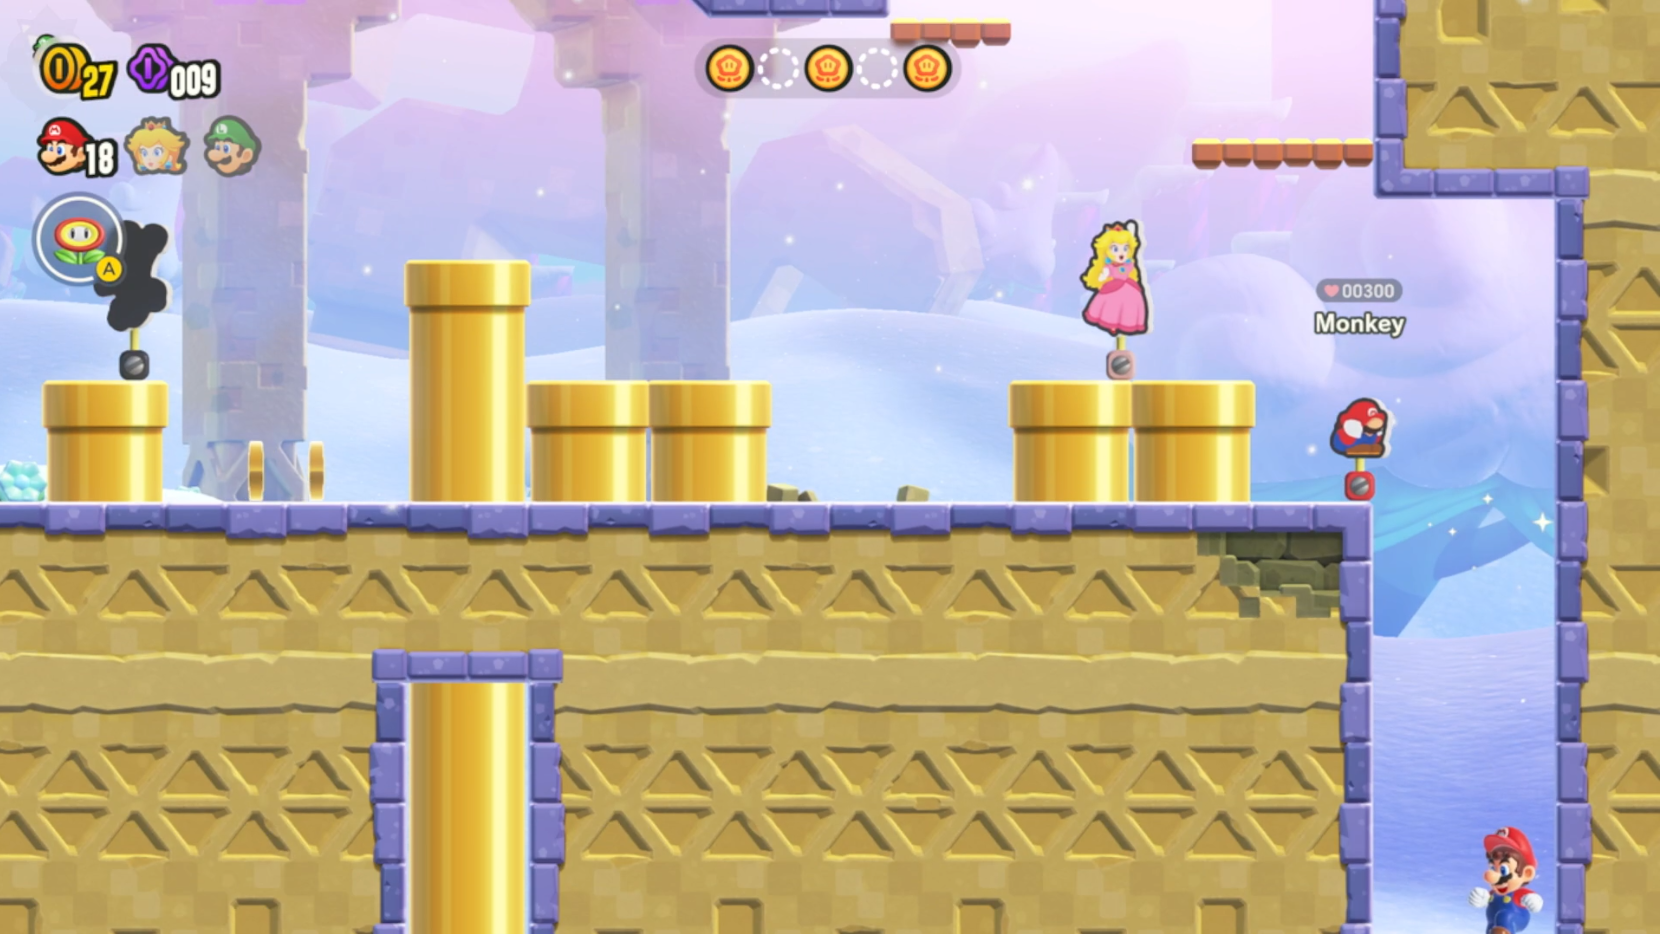 Mario falls down a chute in Super Mario Wonder.